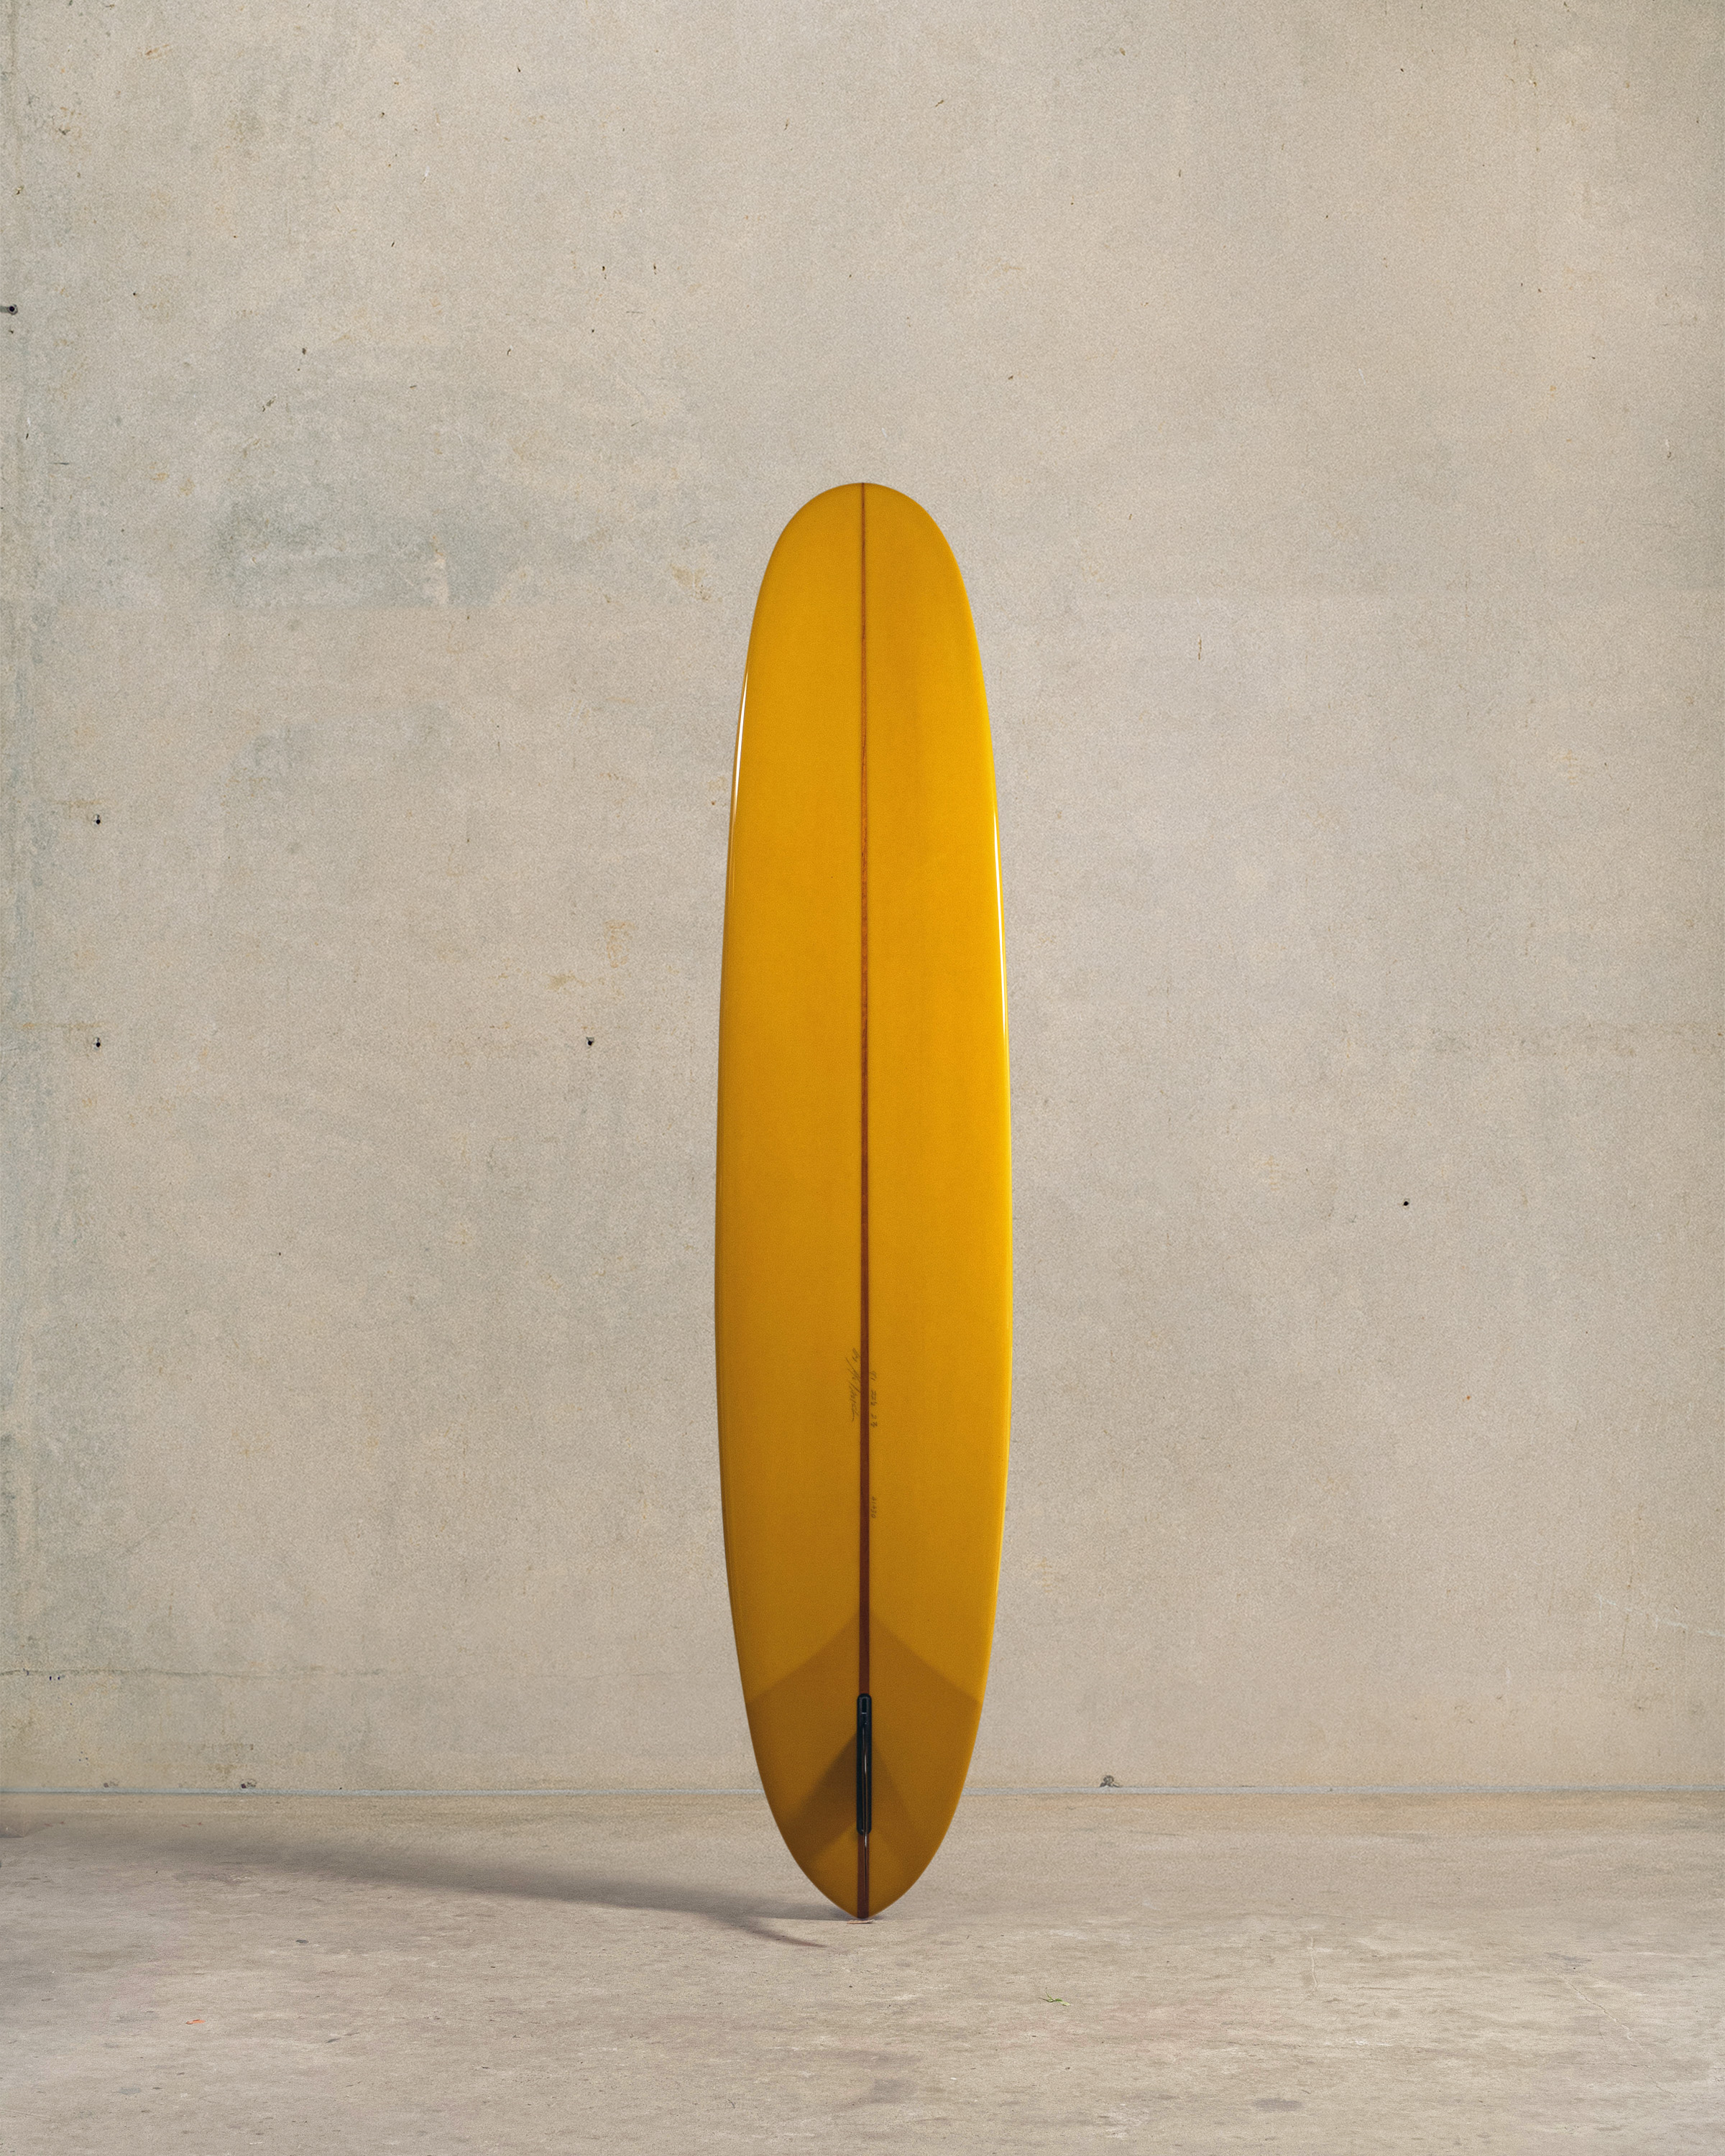 Shop Latest Surfboards Available Online | McTavish Byron Bay 